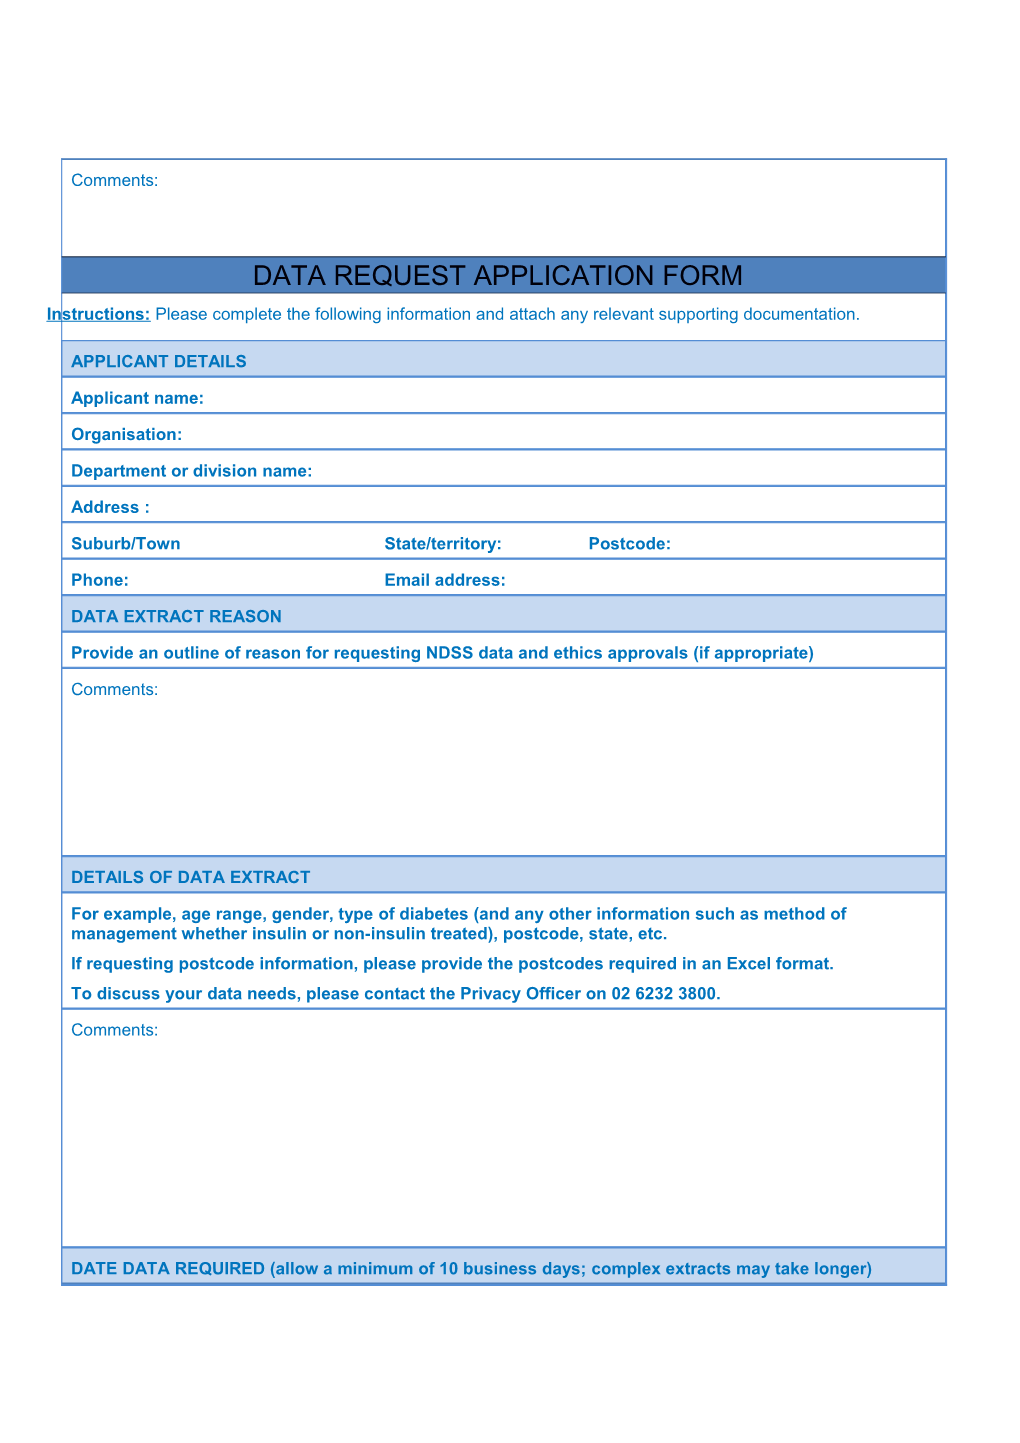 Request to Contact Registrants Application Form